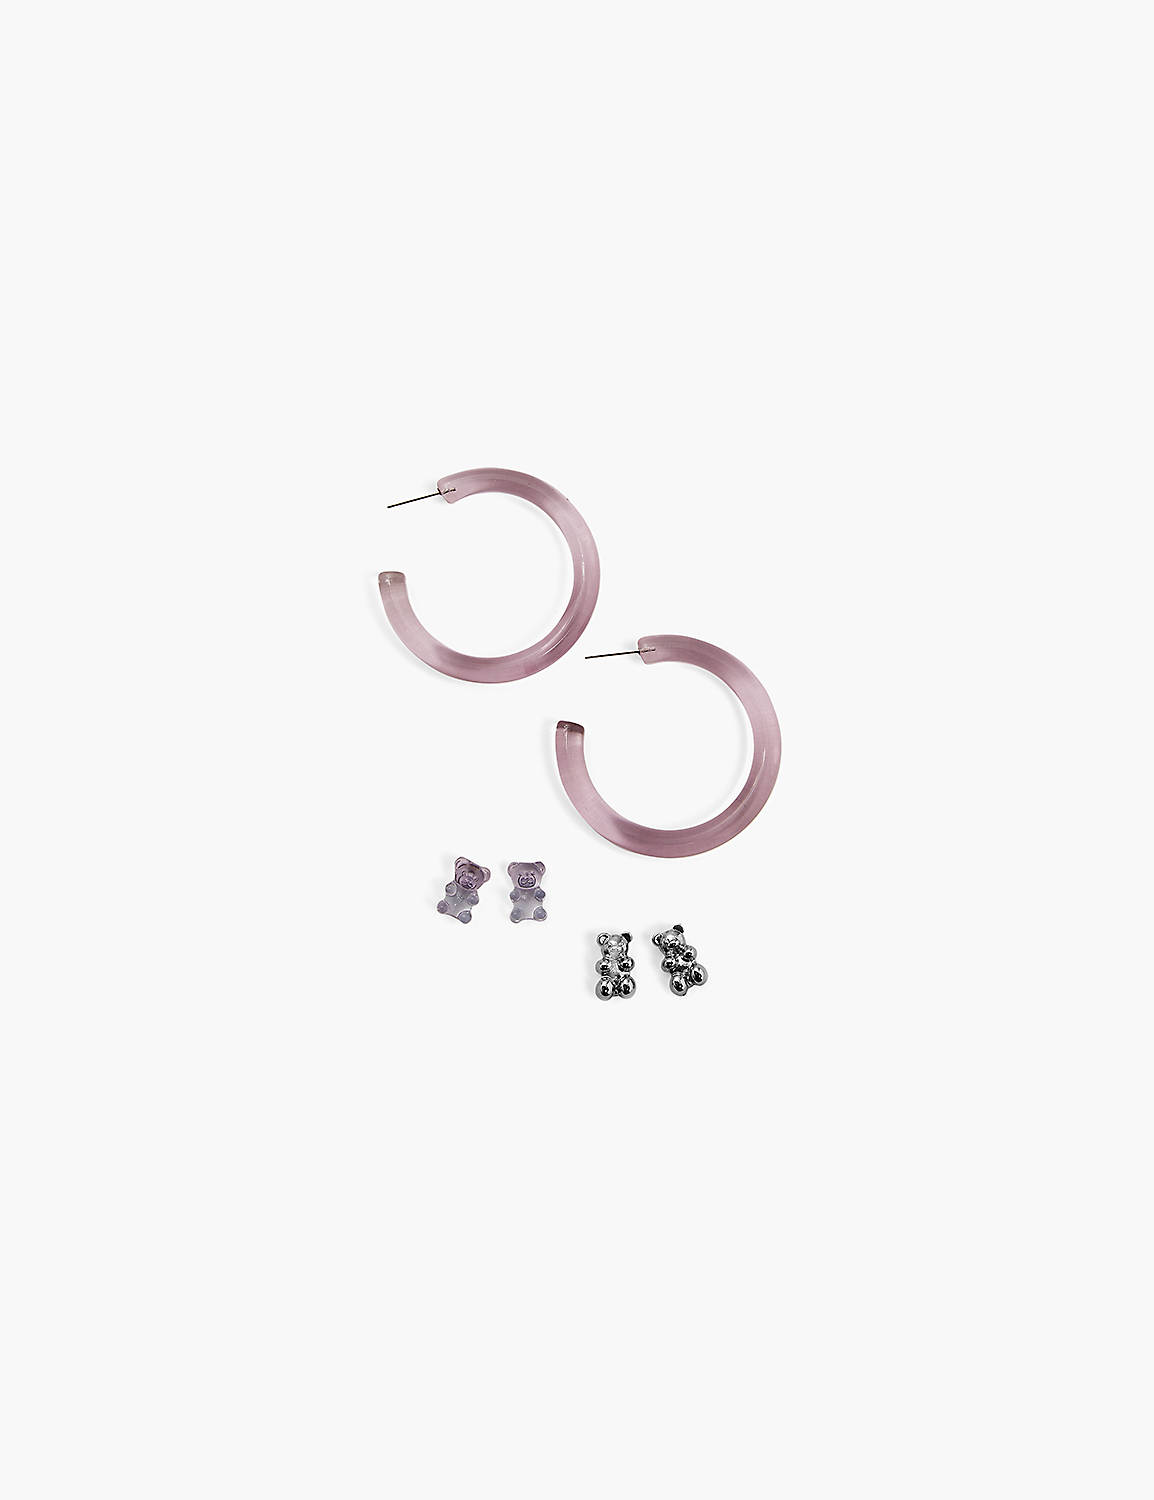 Gummy Bear Earrings - 3 Pack Product Image 1